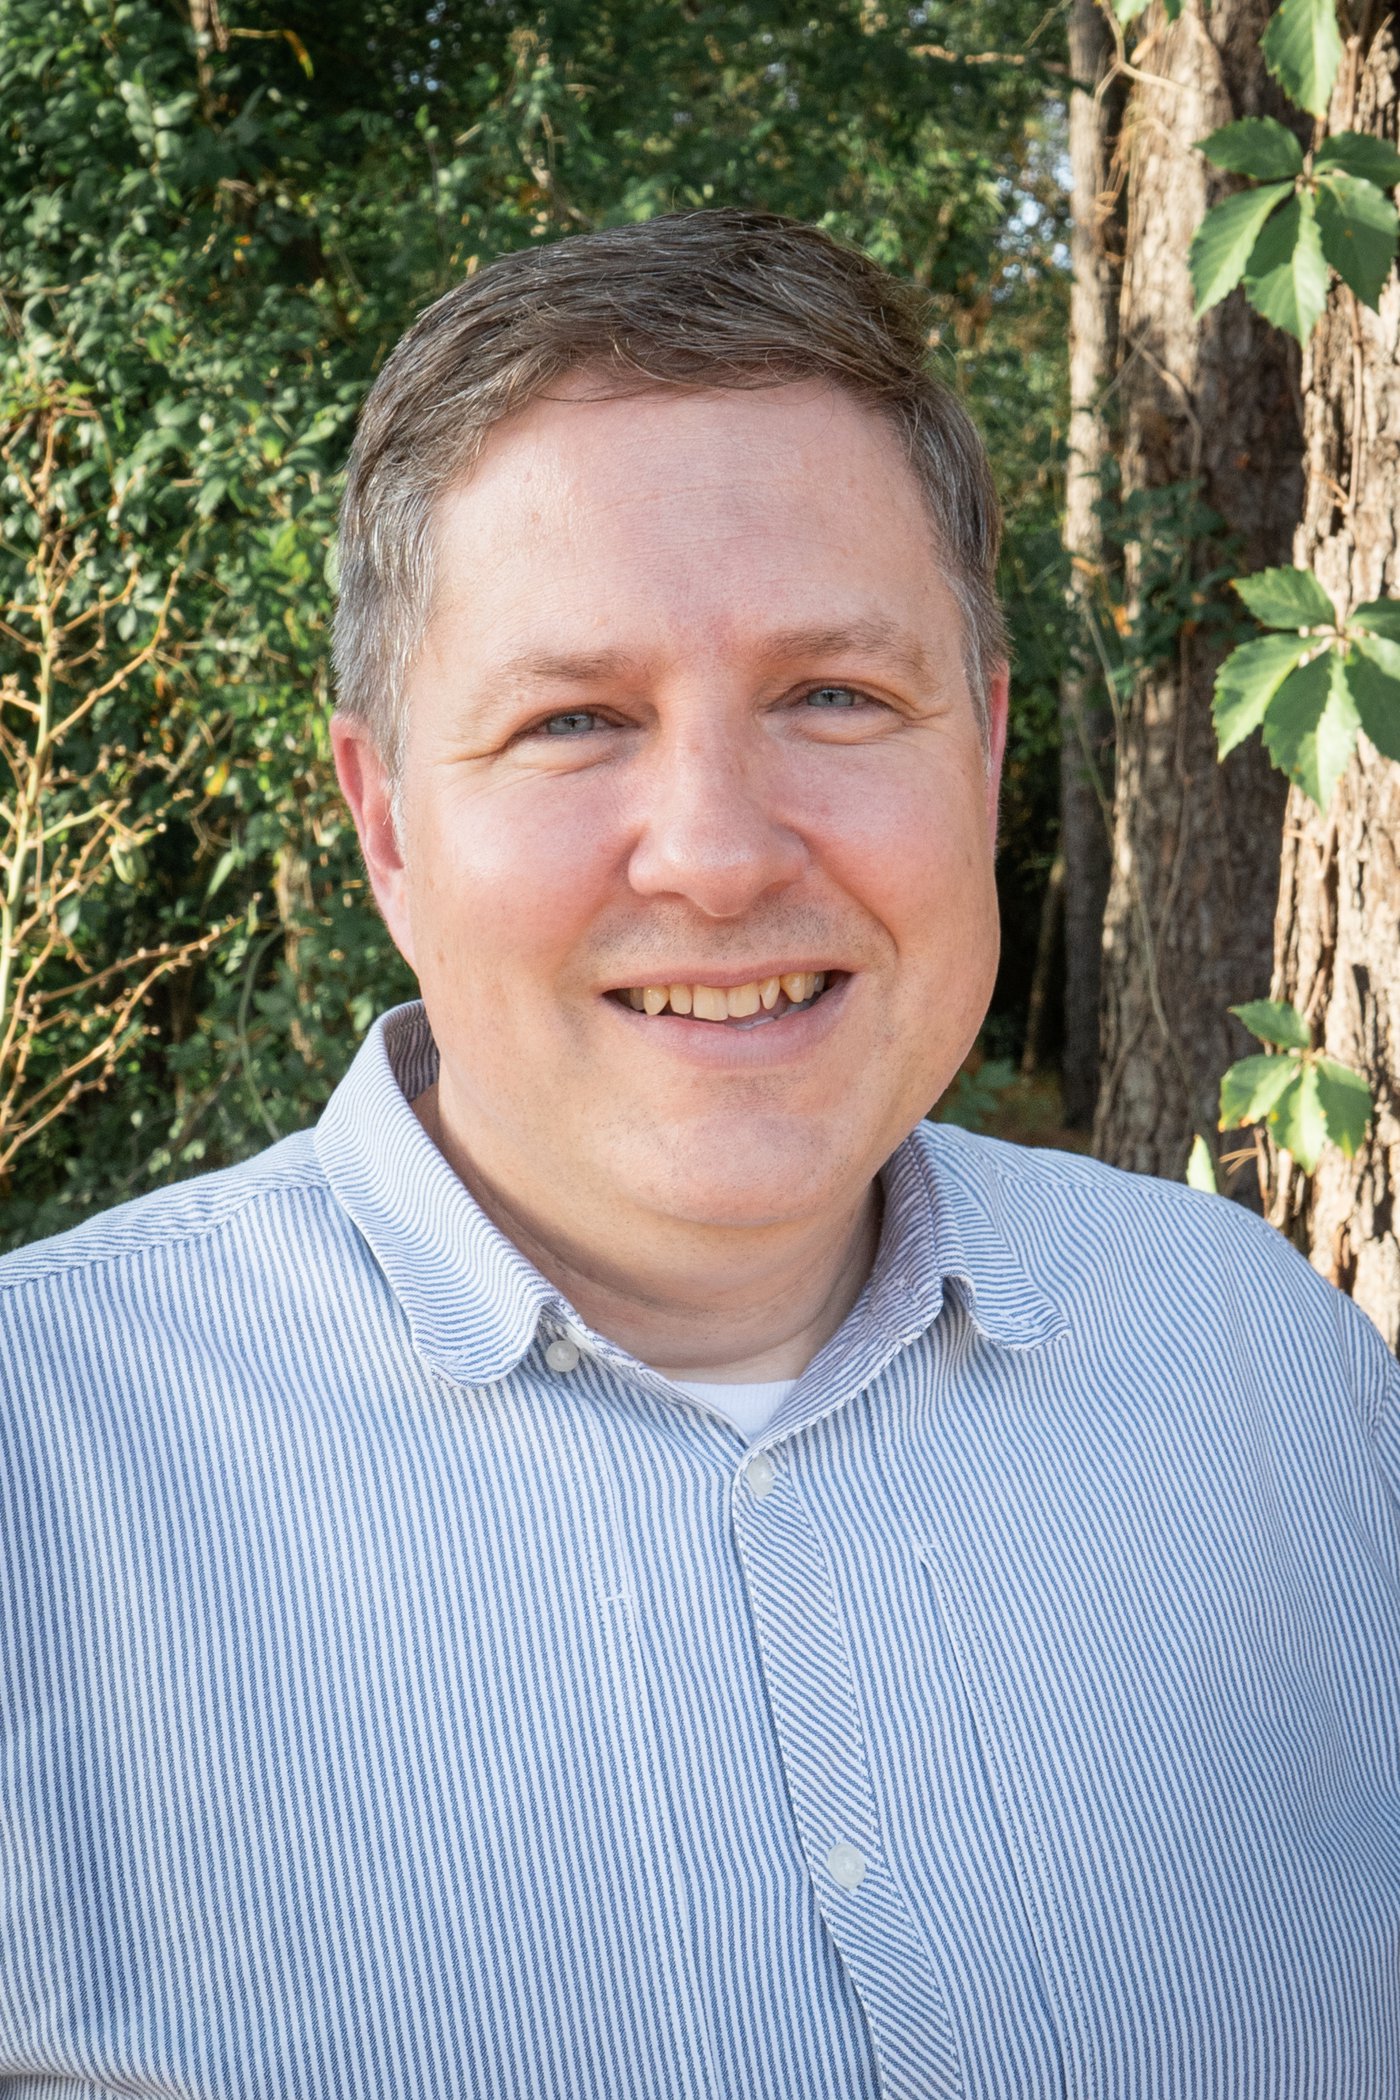 Chris Bower | Lead Pastor/Director of Discipleship